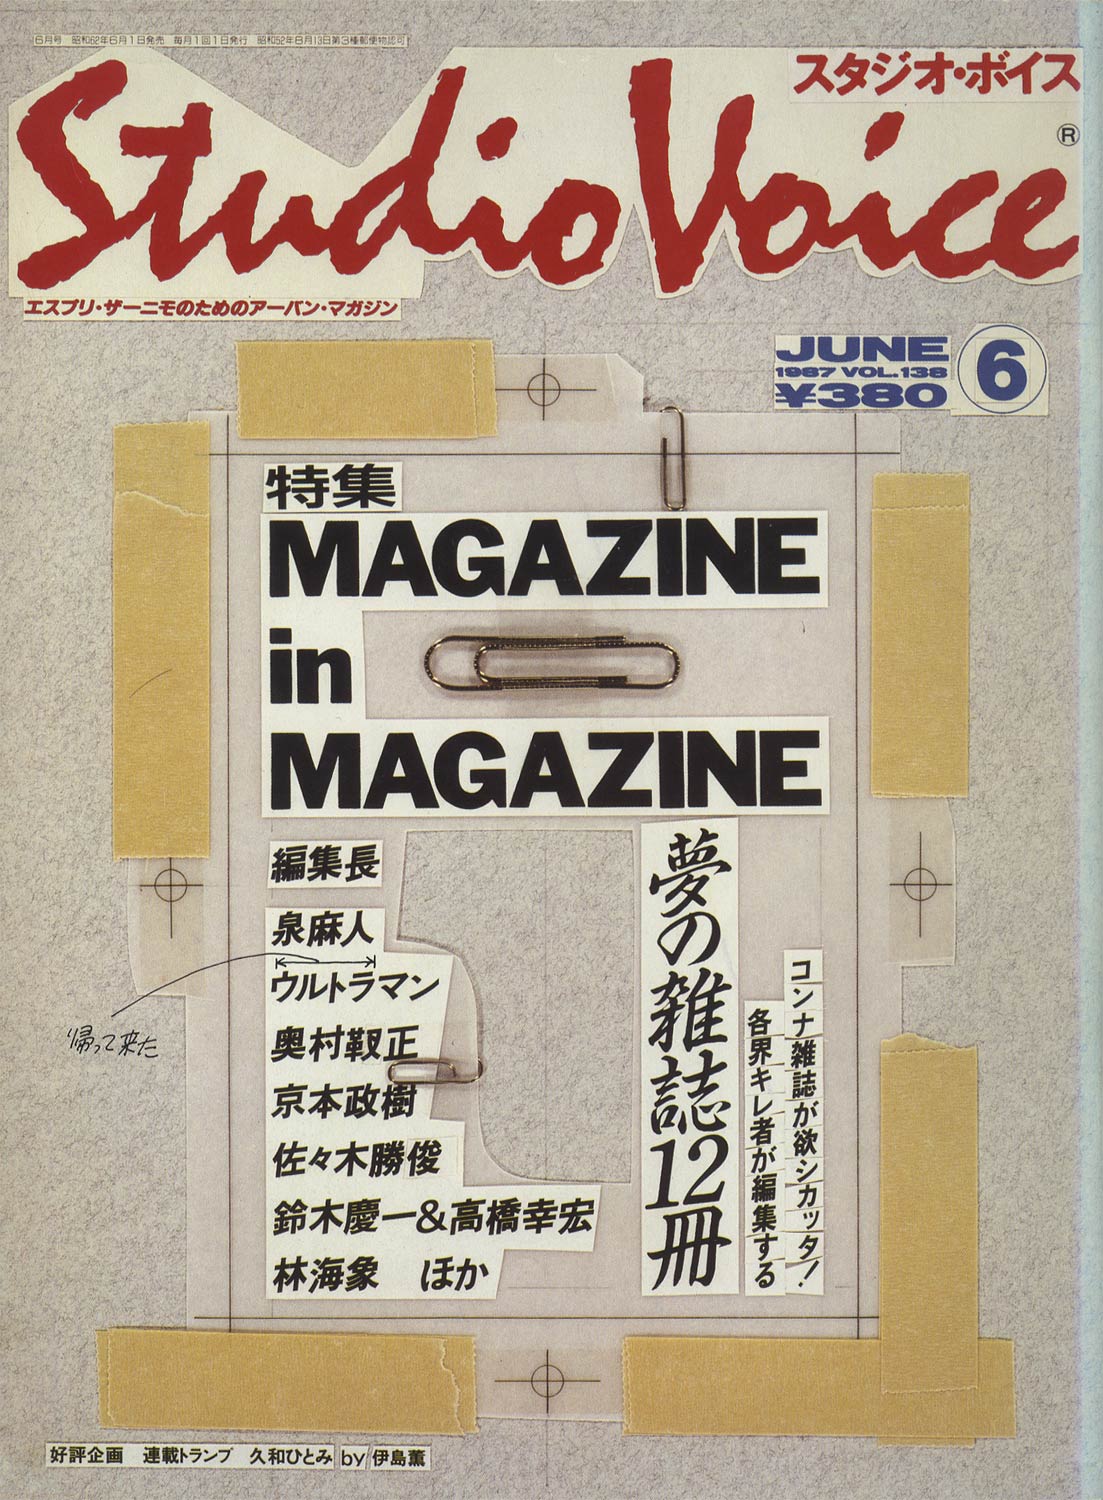 Studio Voice　スタジオ・ボイス June 1987 Vol.138［image1］